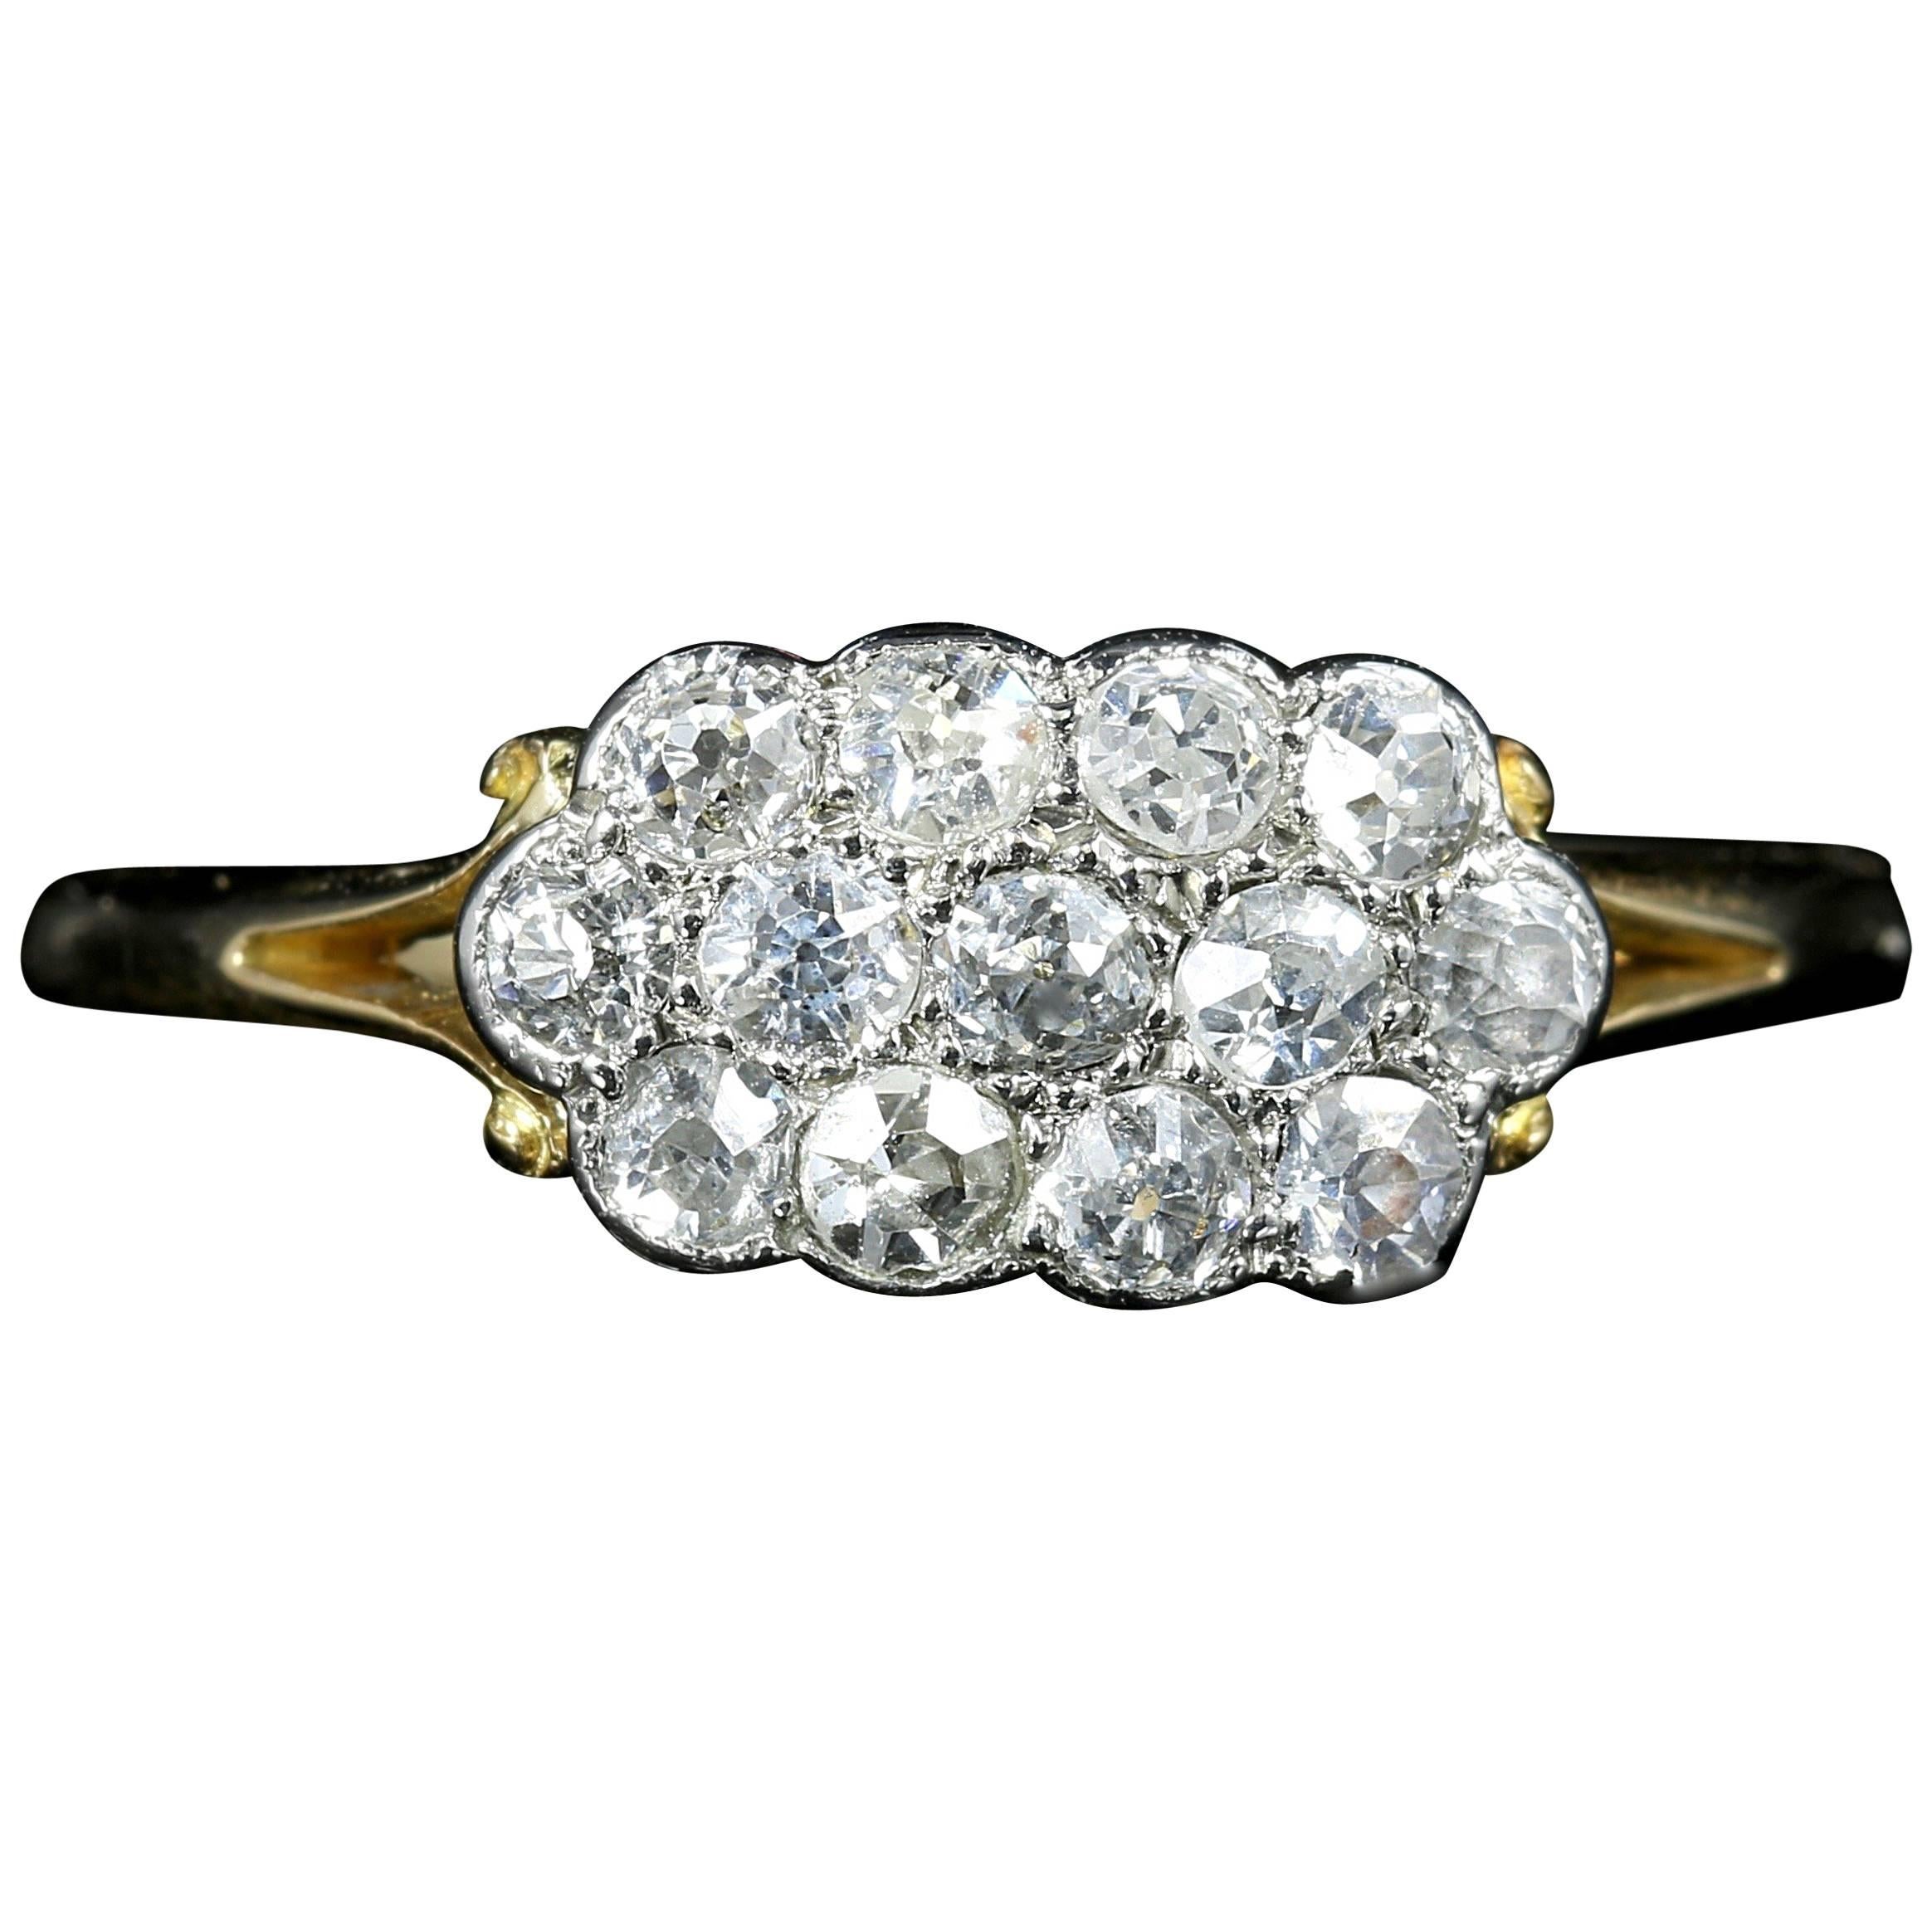 Antique Victorian Diamond Cluster Ring 18 Carat Gold, circa 1900